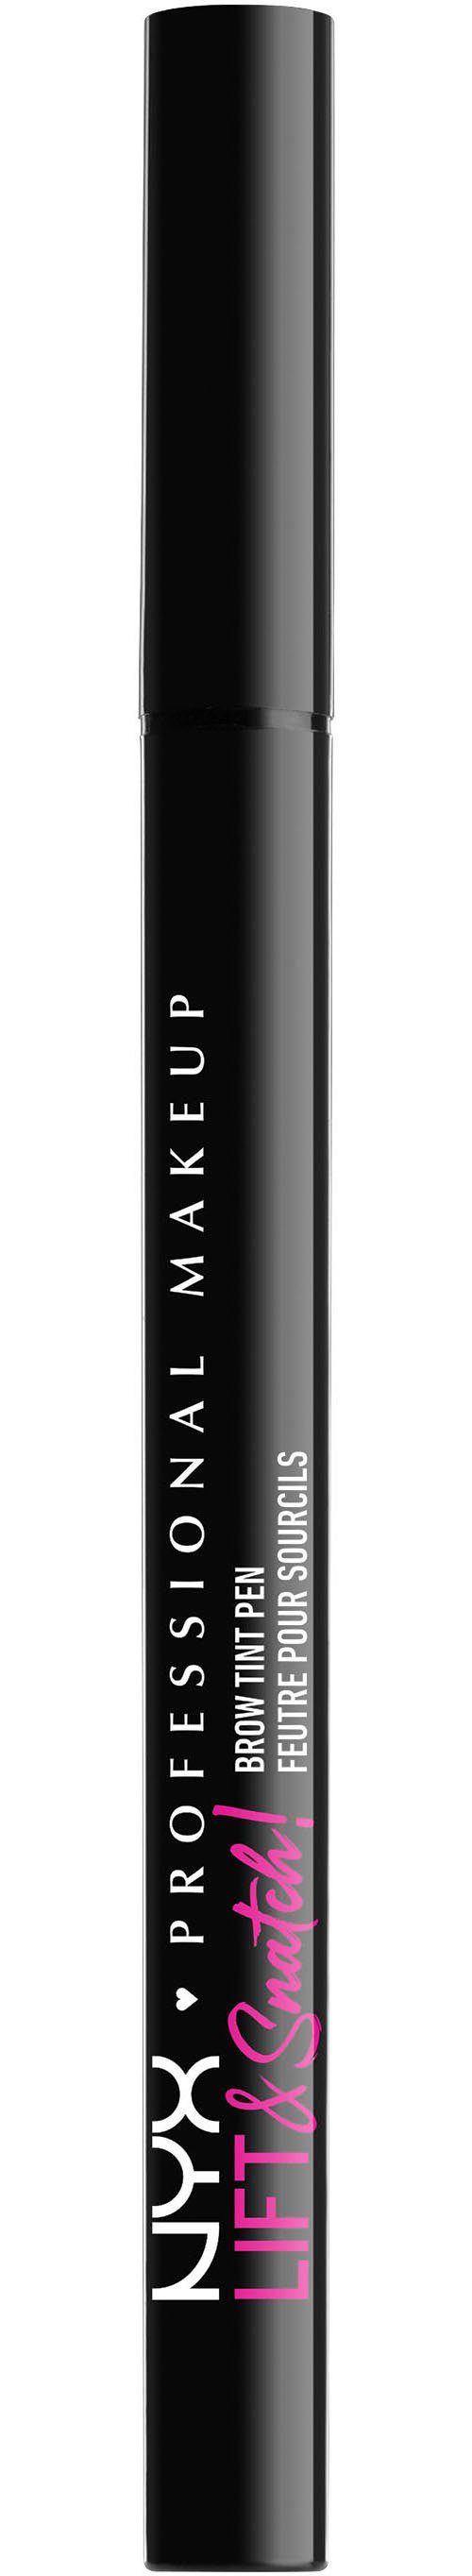 NYX black Professional & Augenbrauen-Stift Pen Tint Snatch Lift Makeup Brow